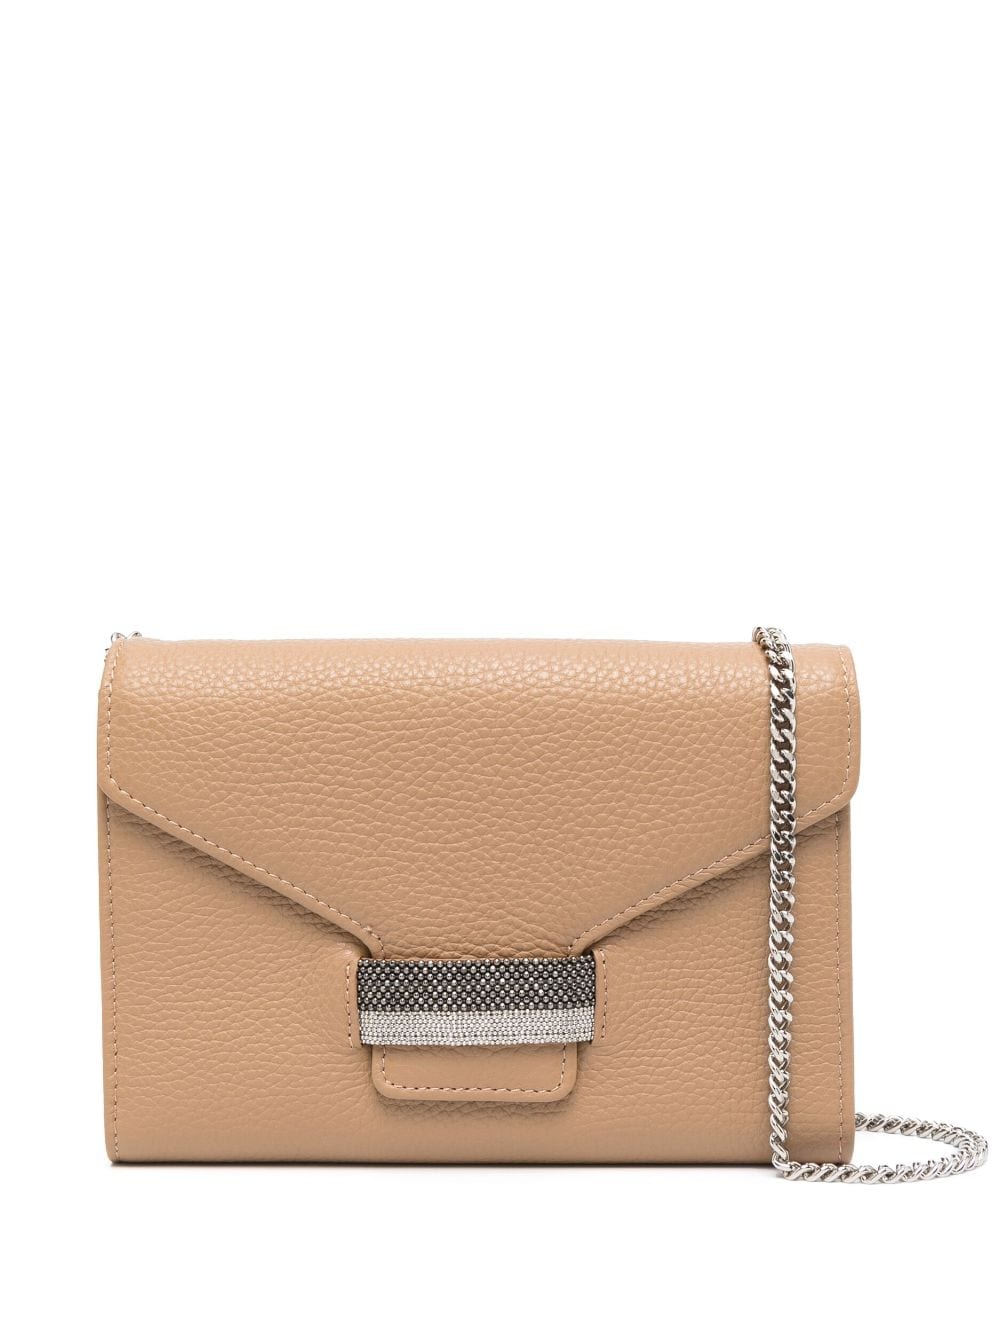 Image 1 of Fabiana Filippi Crystal-embellished leather clutch bag